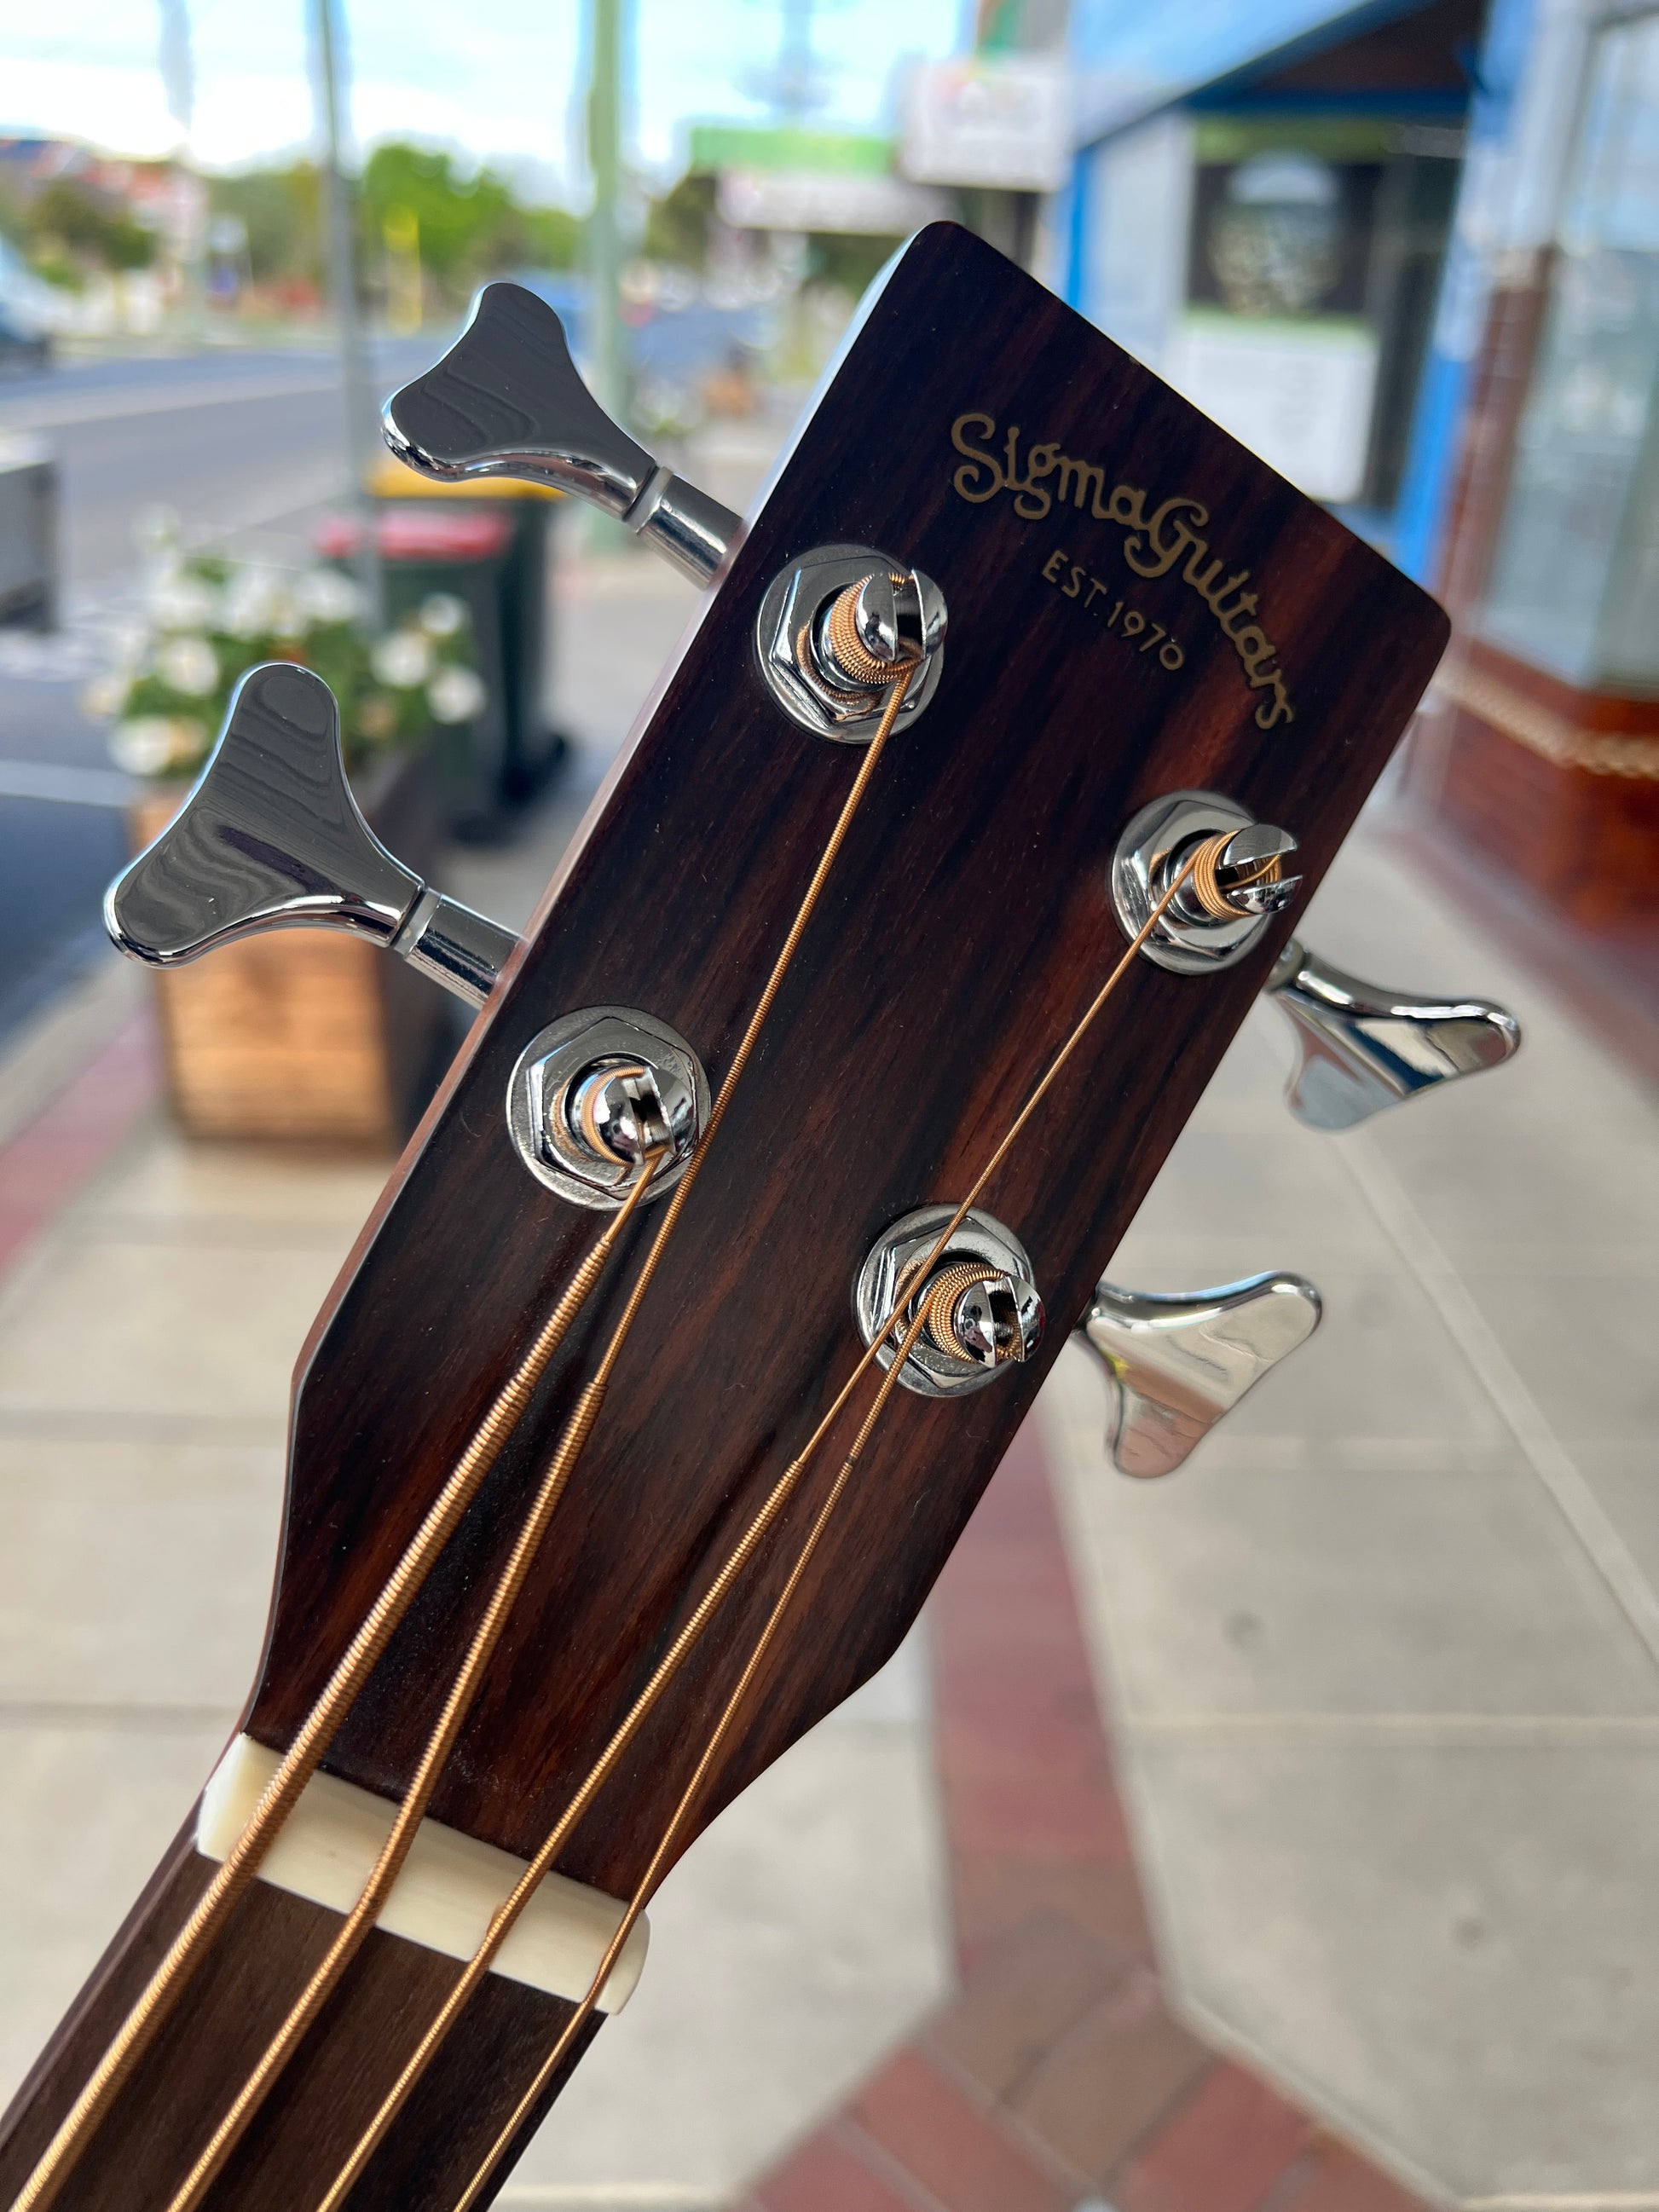 Sigma BMC-1STE Acoustic Bass